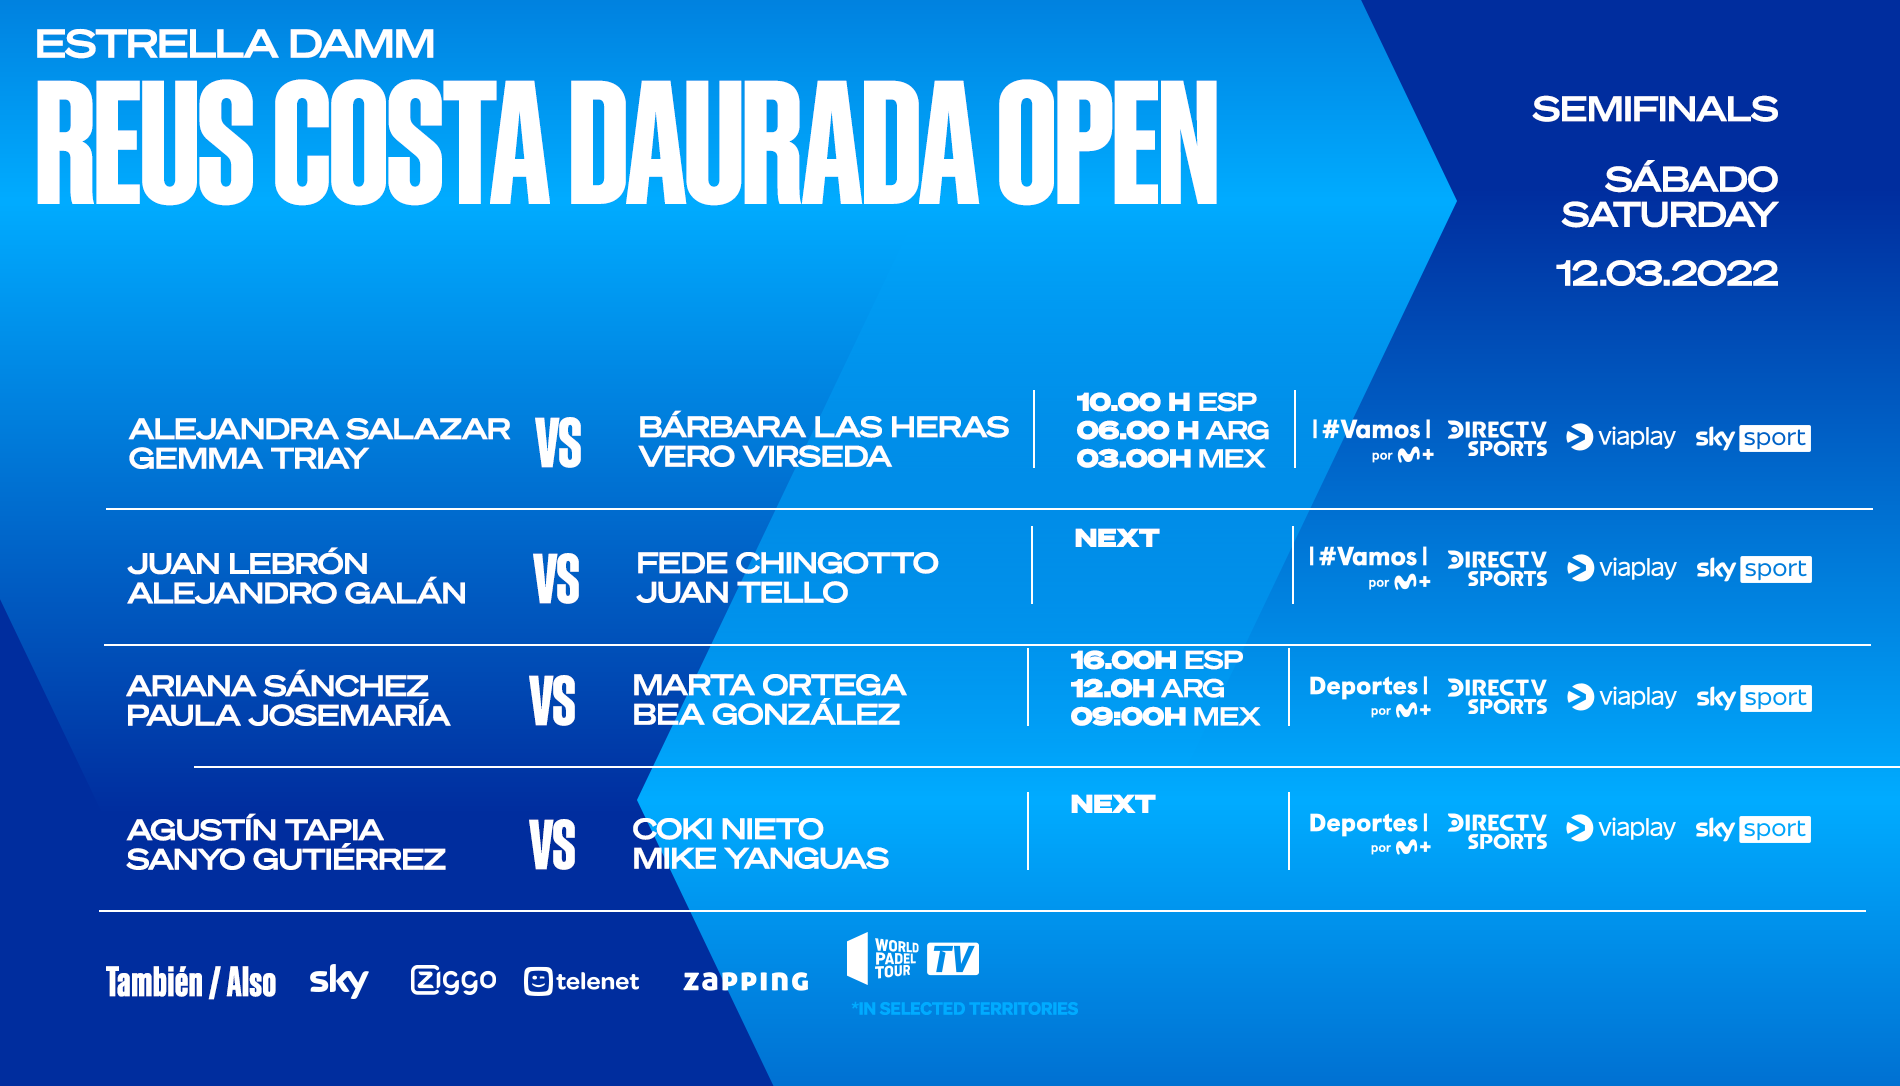 Watch the Semifinals of the Estrella Damm Reus Costa Daurada Open